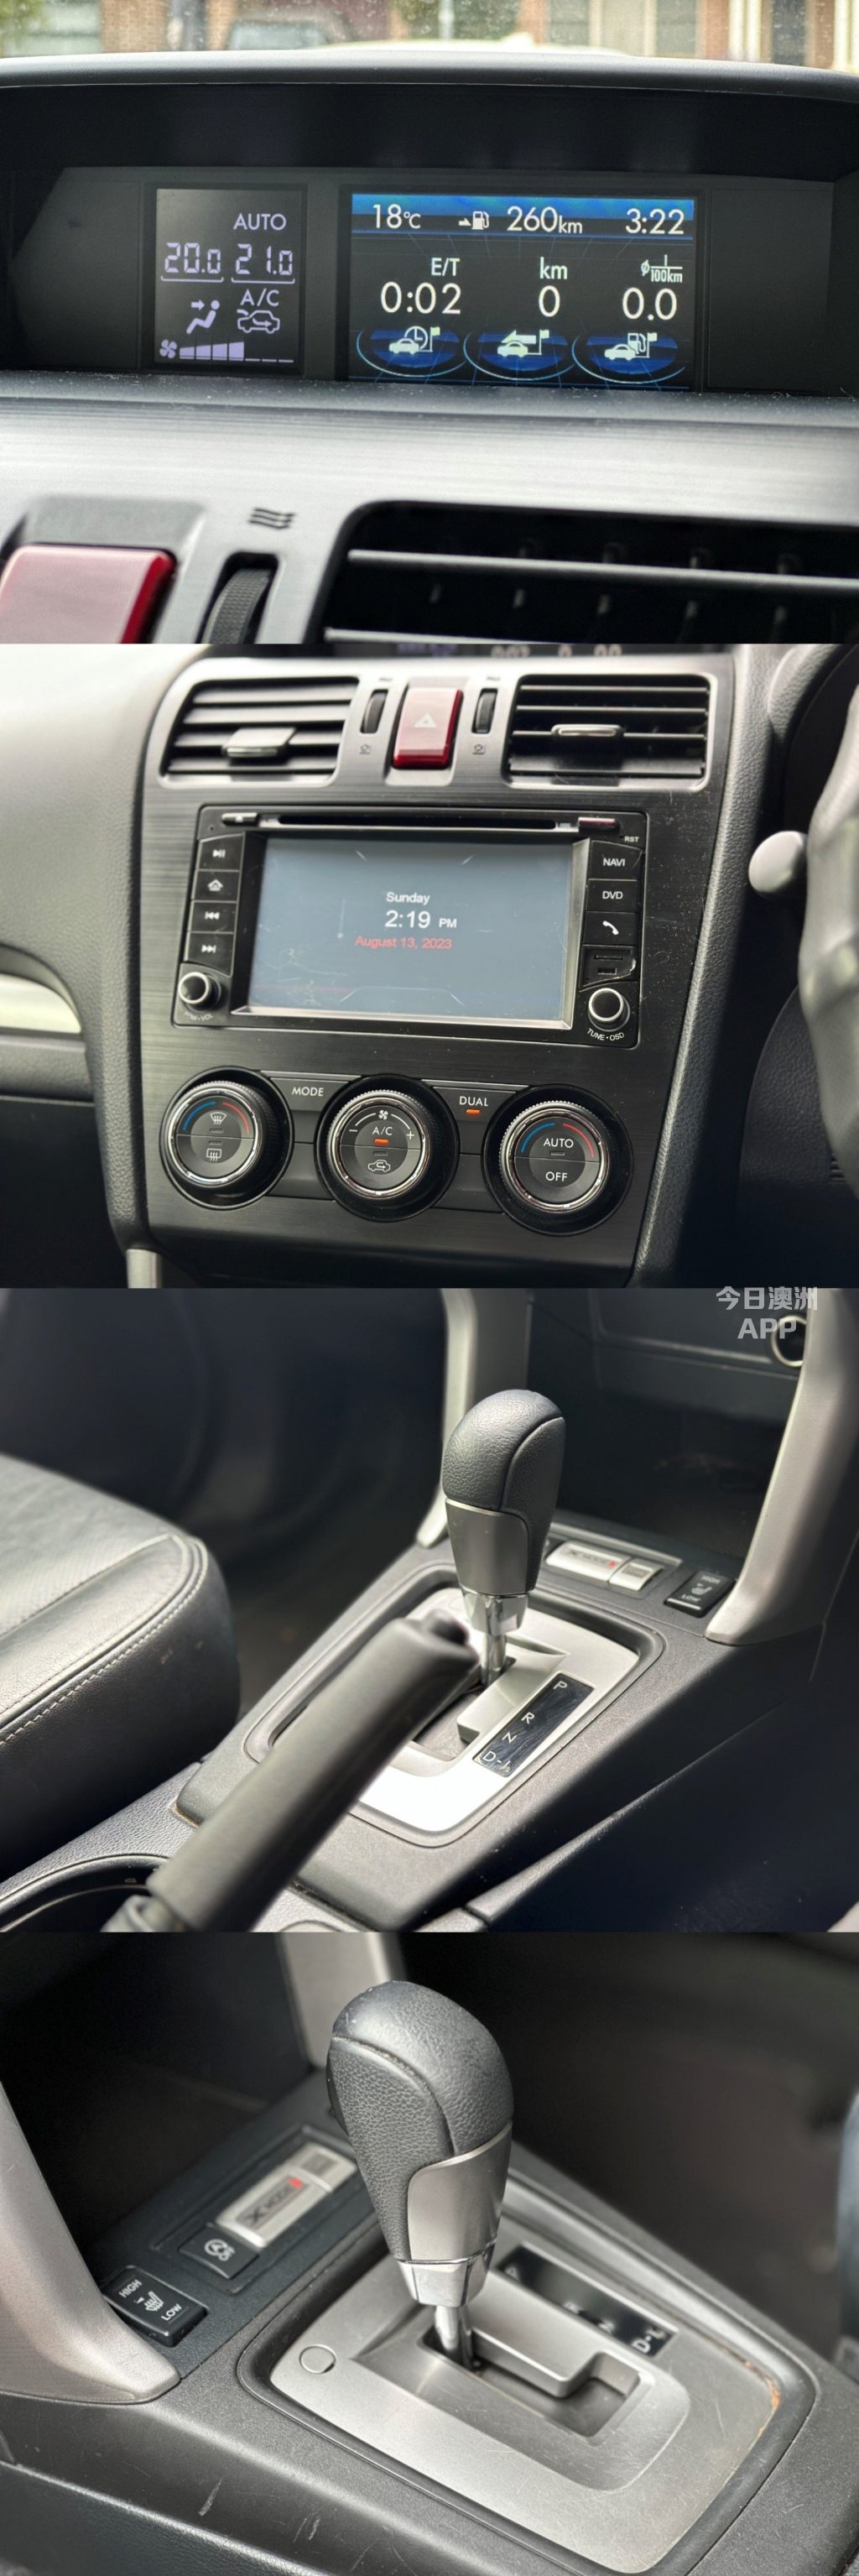 2014 Subaru Forester 风格时尚而健壮 宽敞舒适 感兴趣私聊